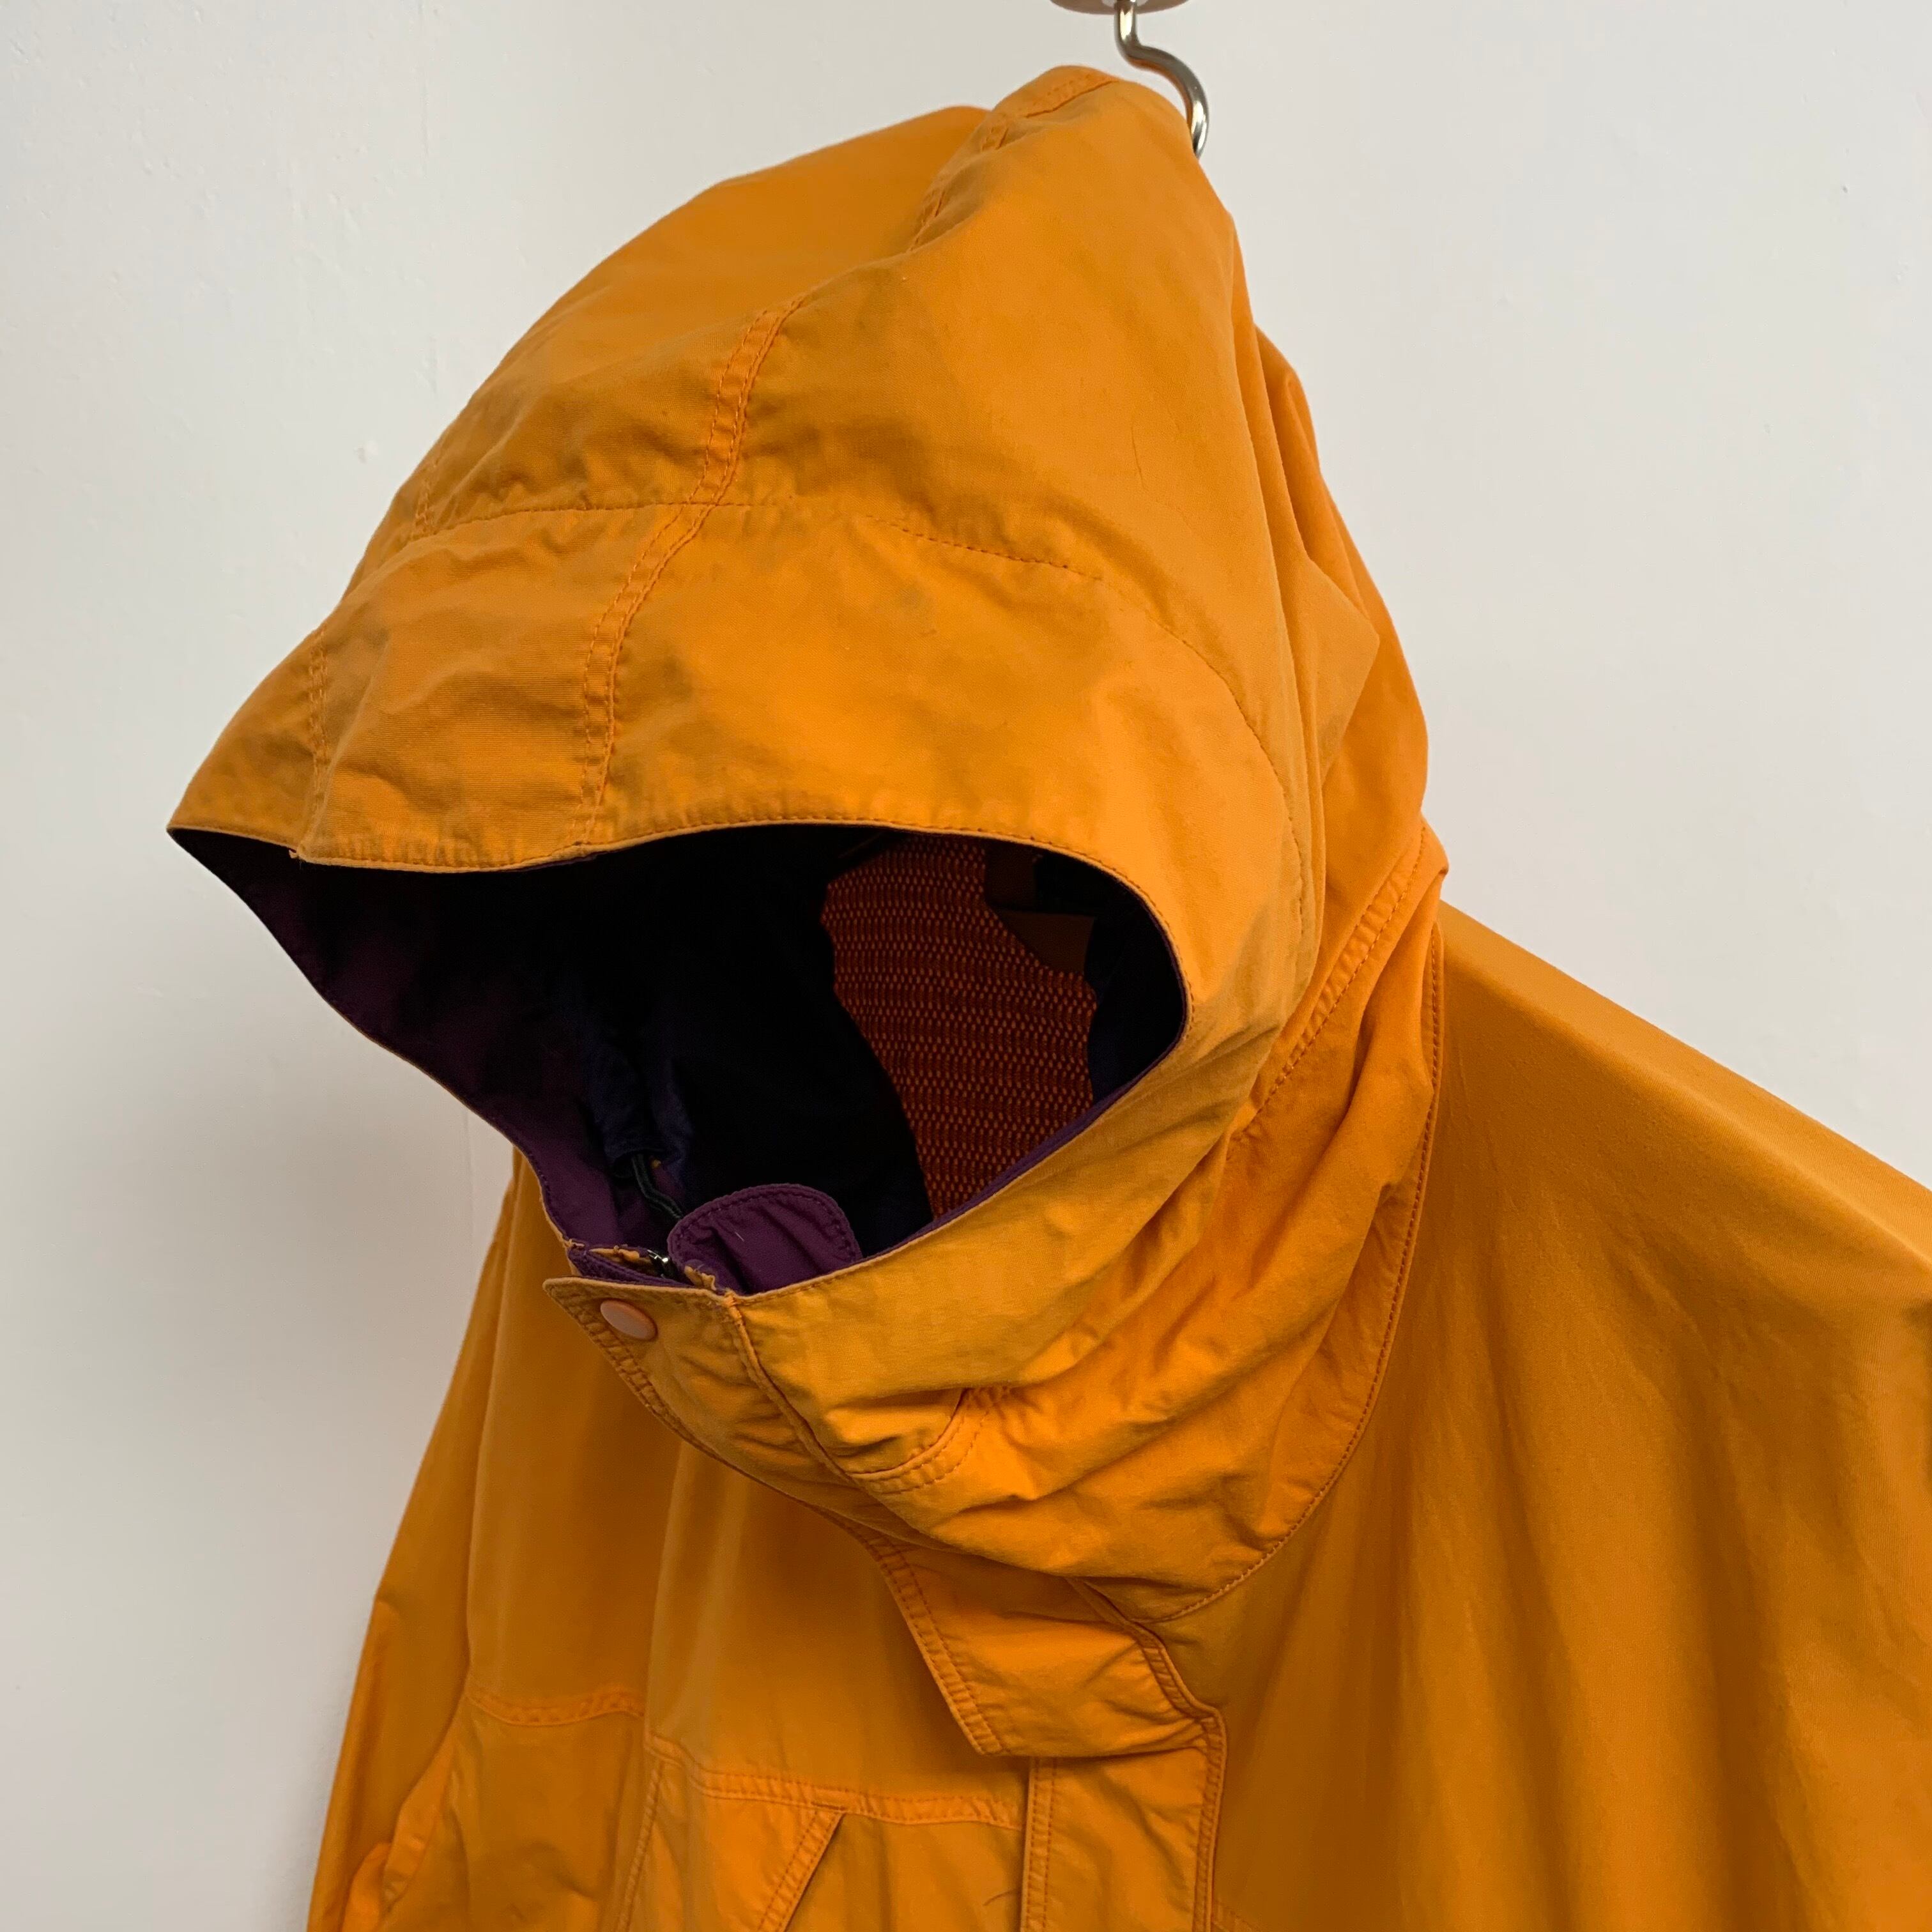 0175. 1990's Patagonia storm jacket マンゴー オレンジ ストーム